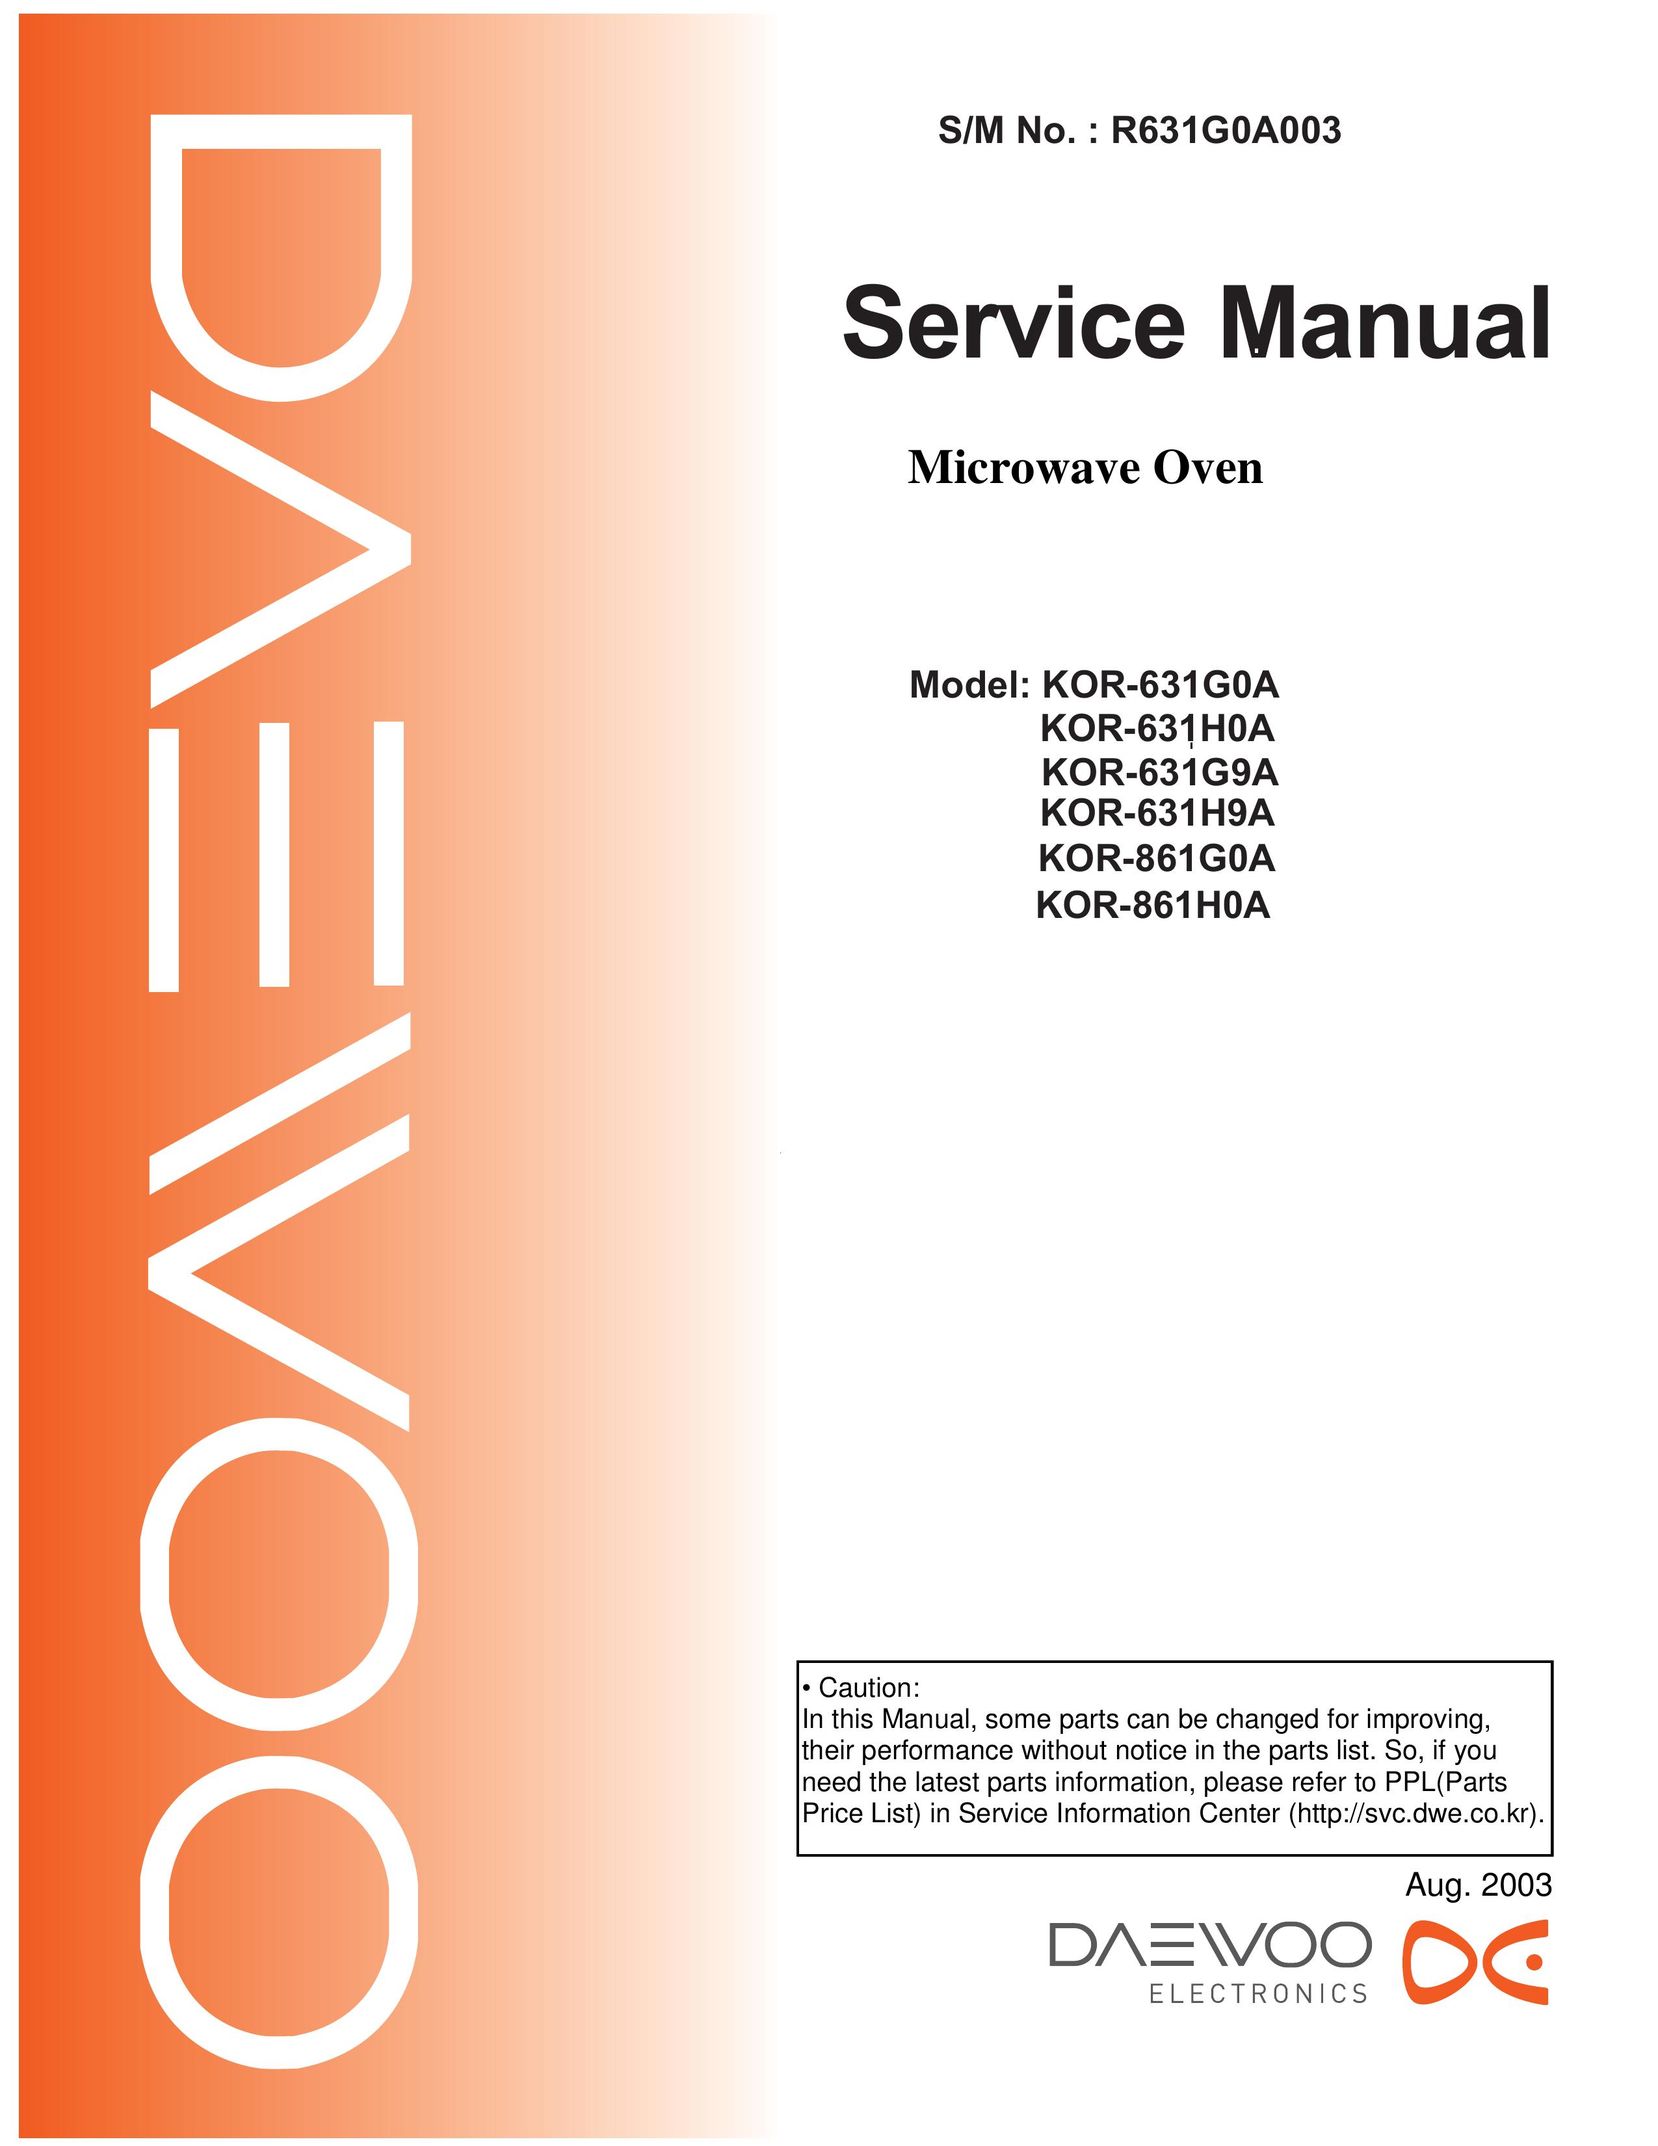 Daewoo KOR-631G0A Microwave Oven User Manual